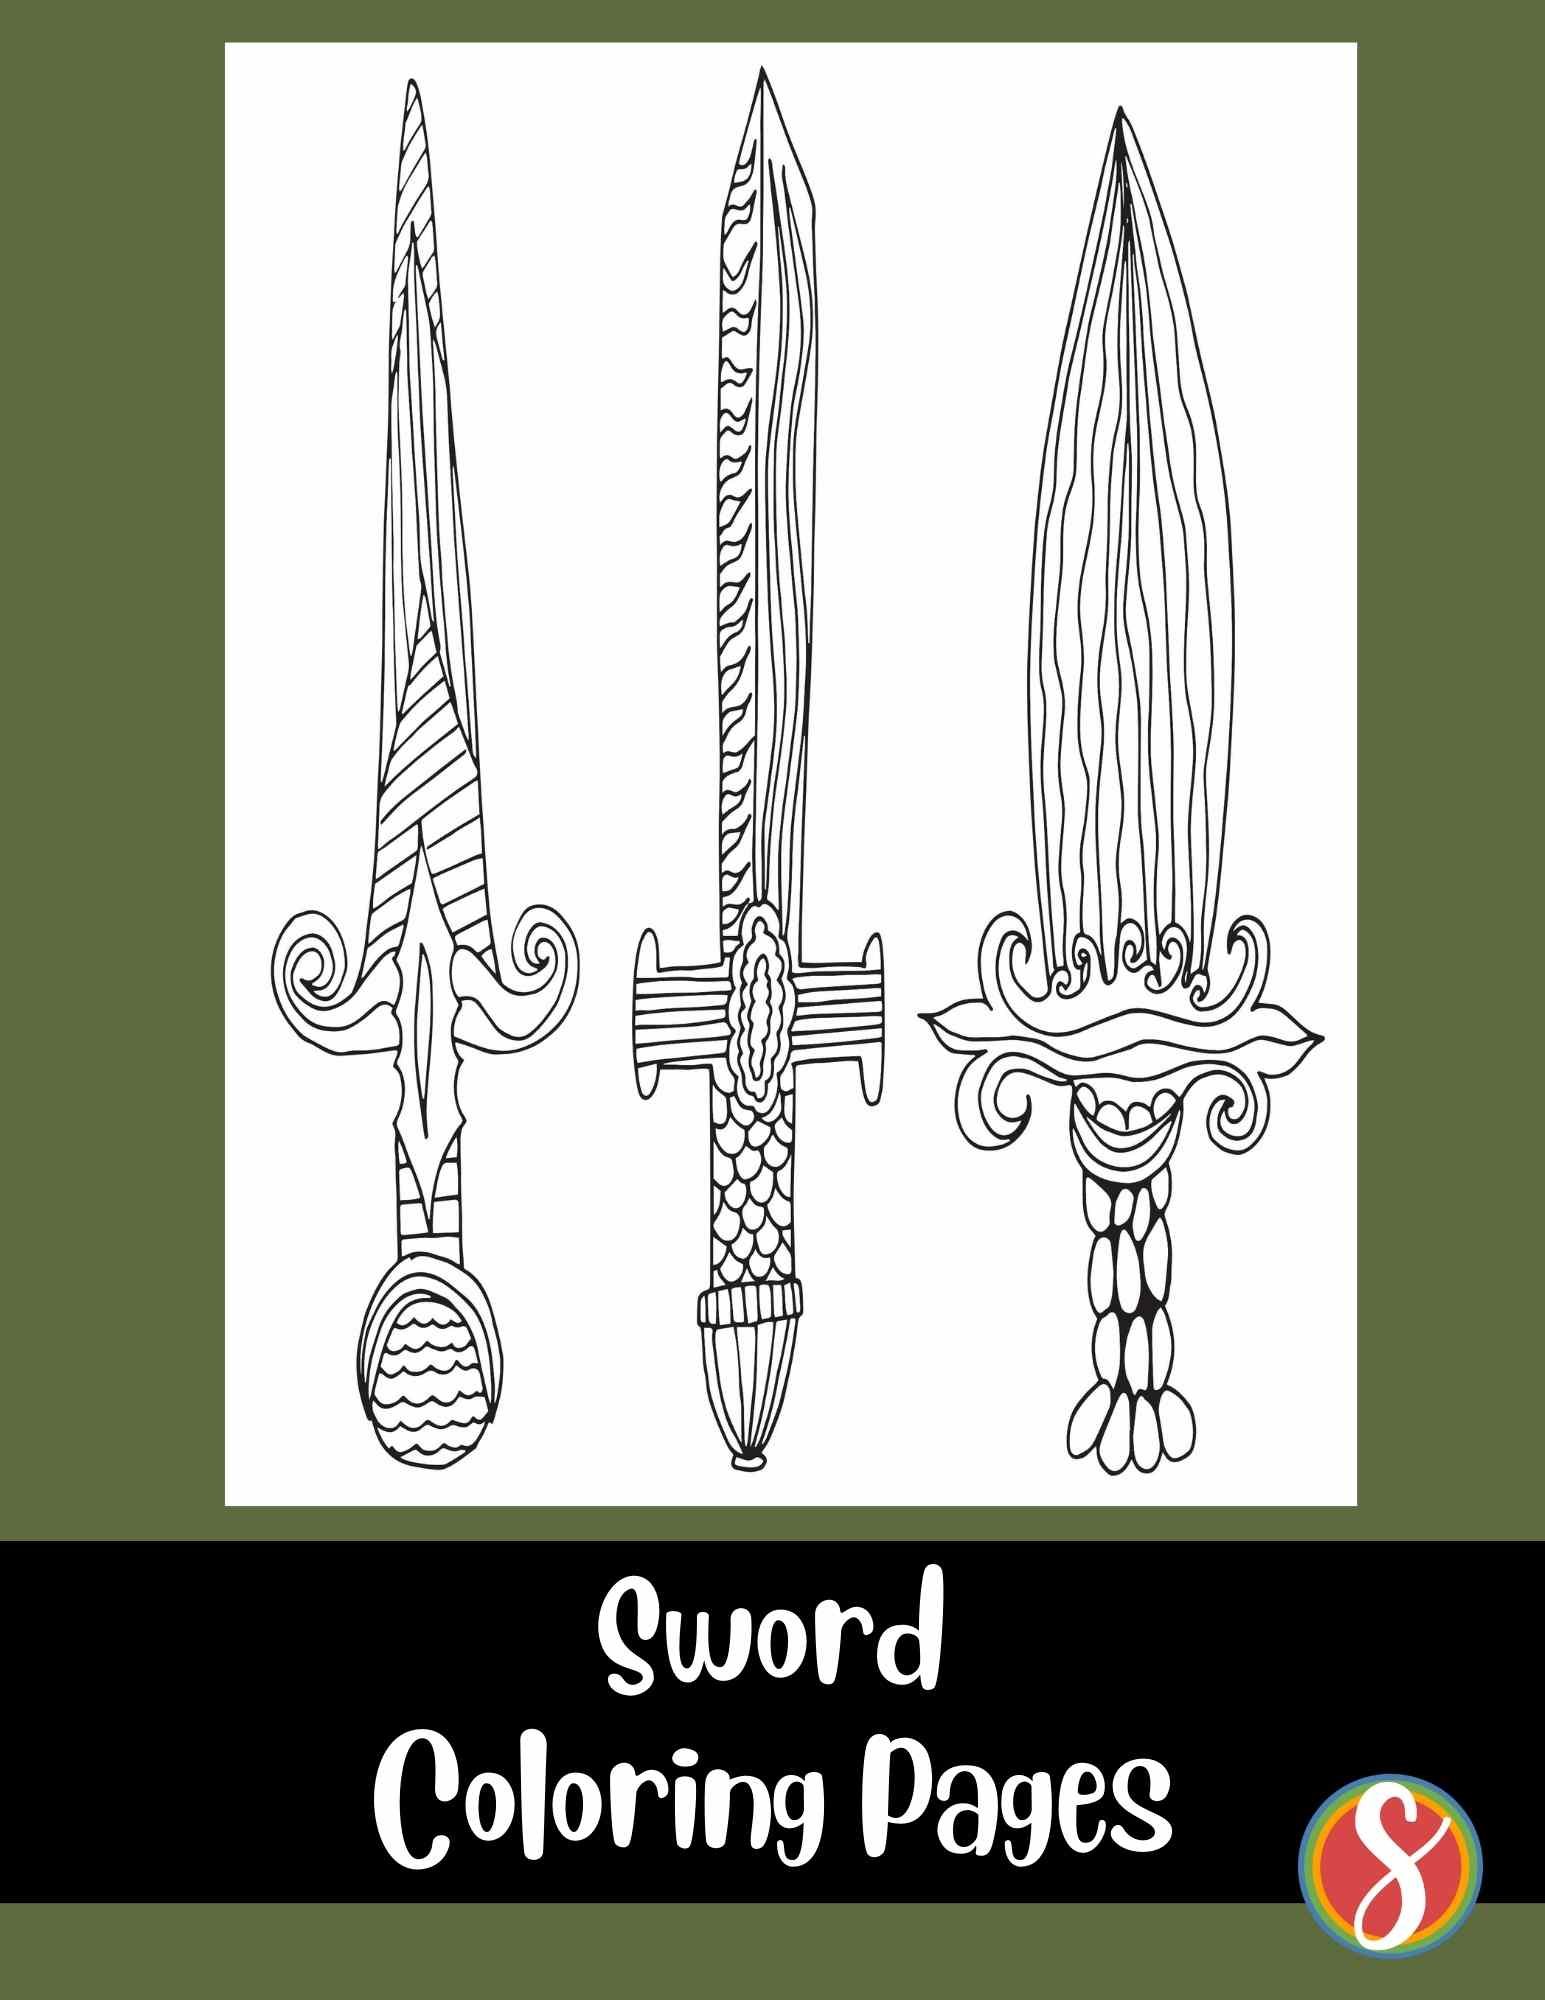 3 swords to color with doodle details inside